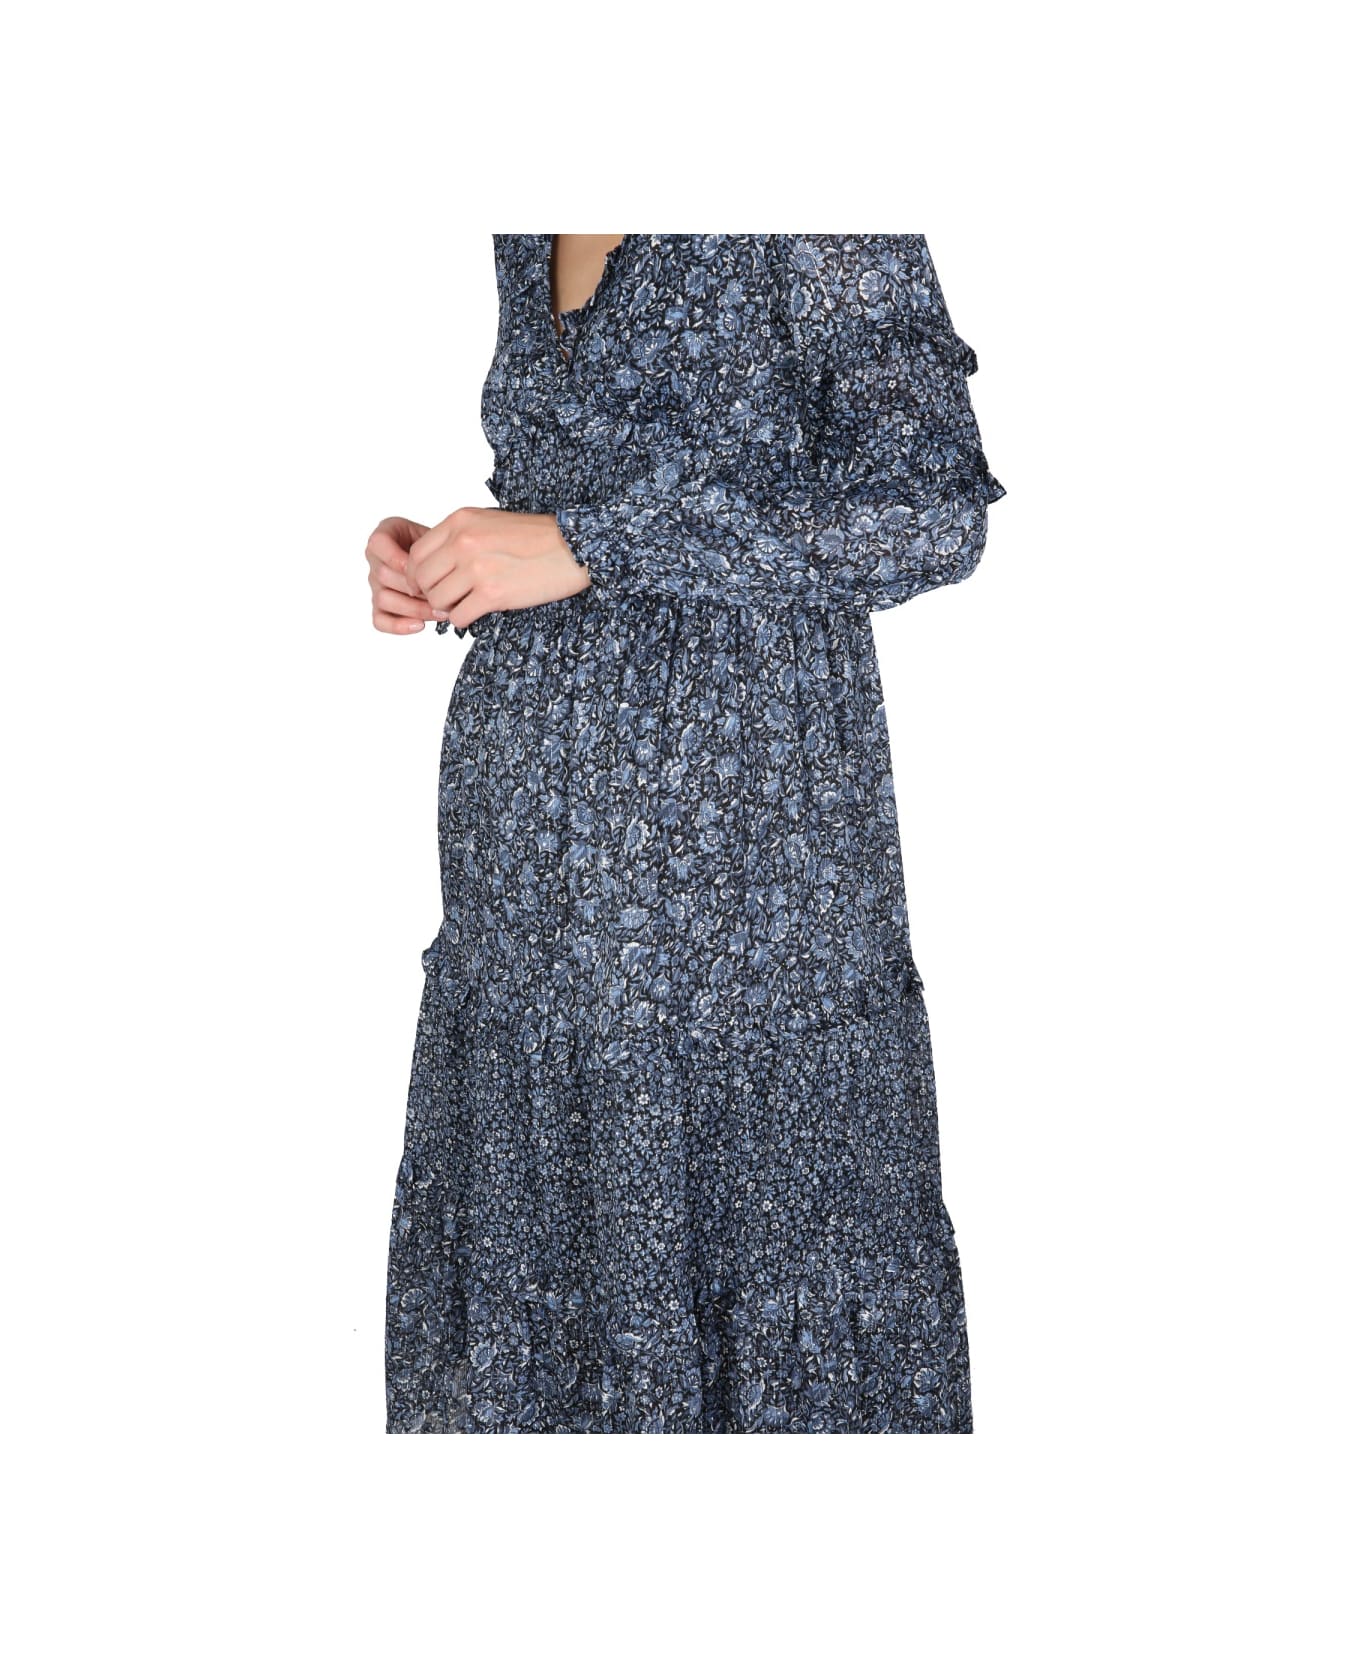 Michael Kors Dress With Floral Print - BLUE